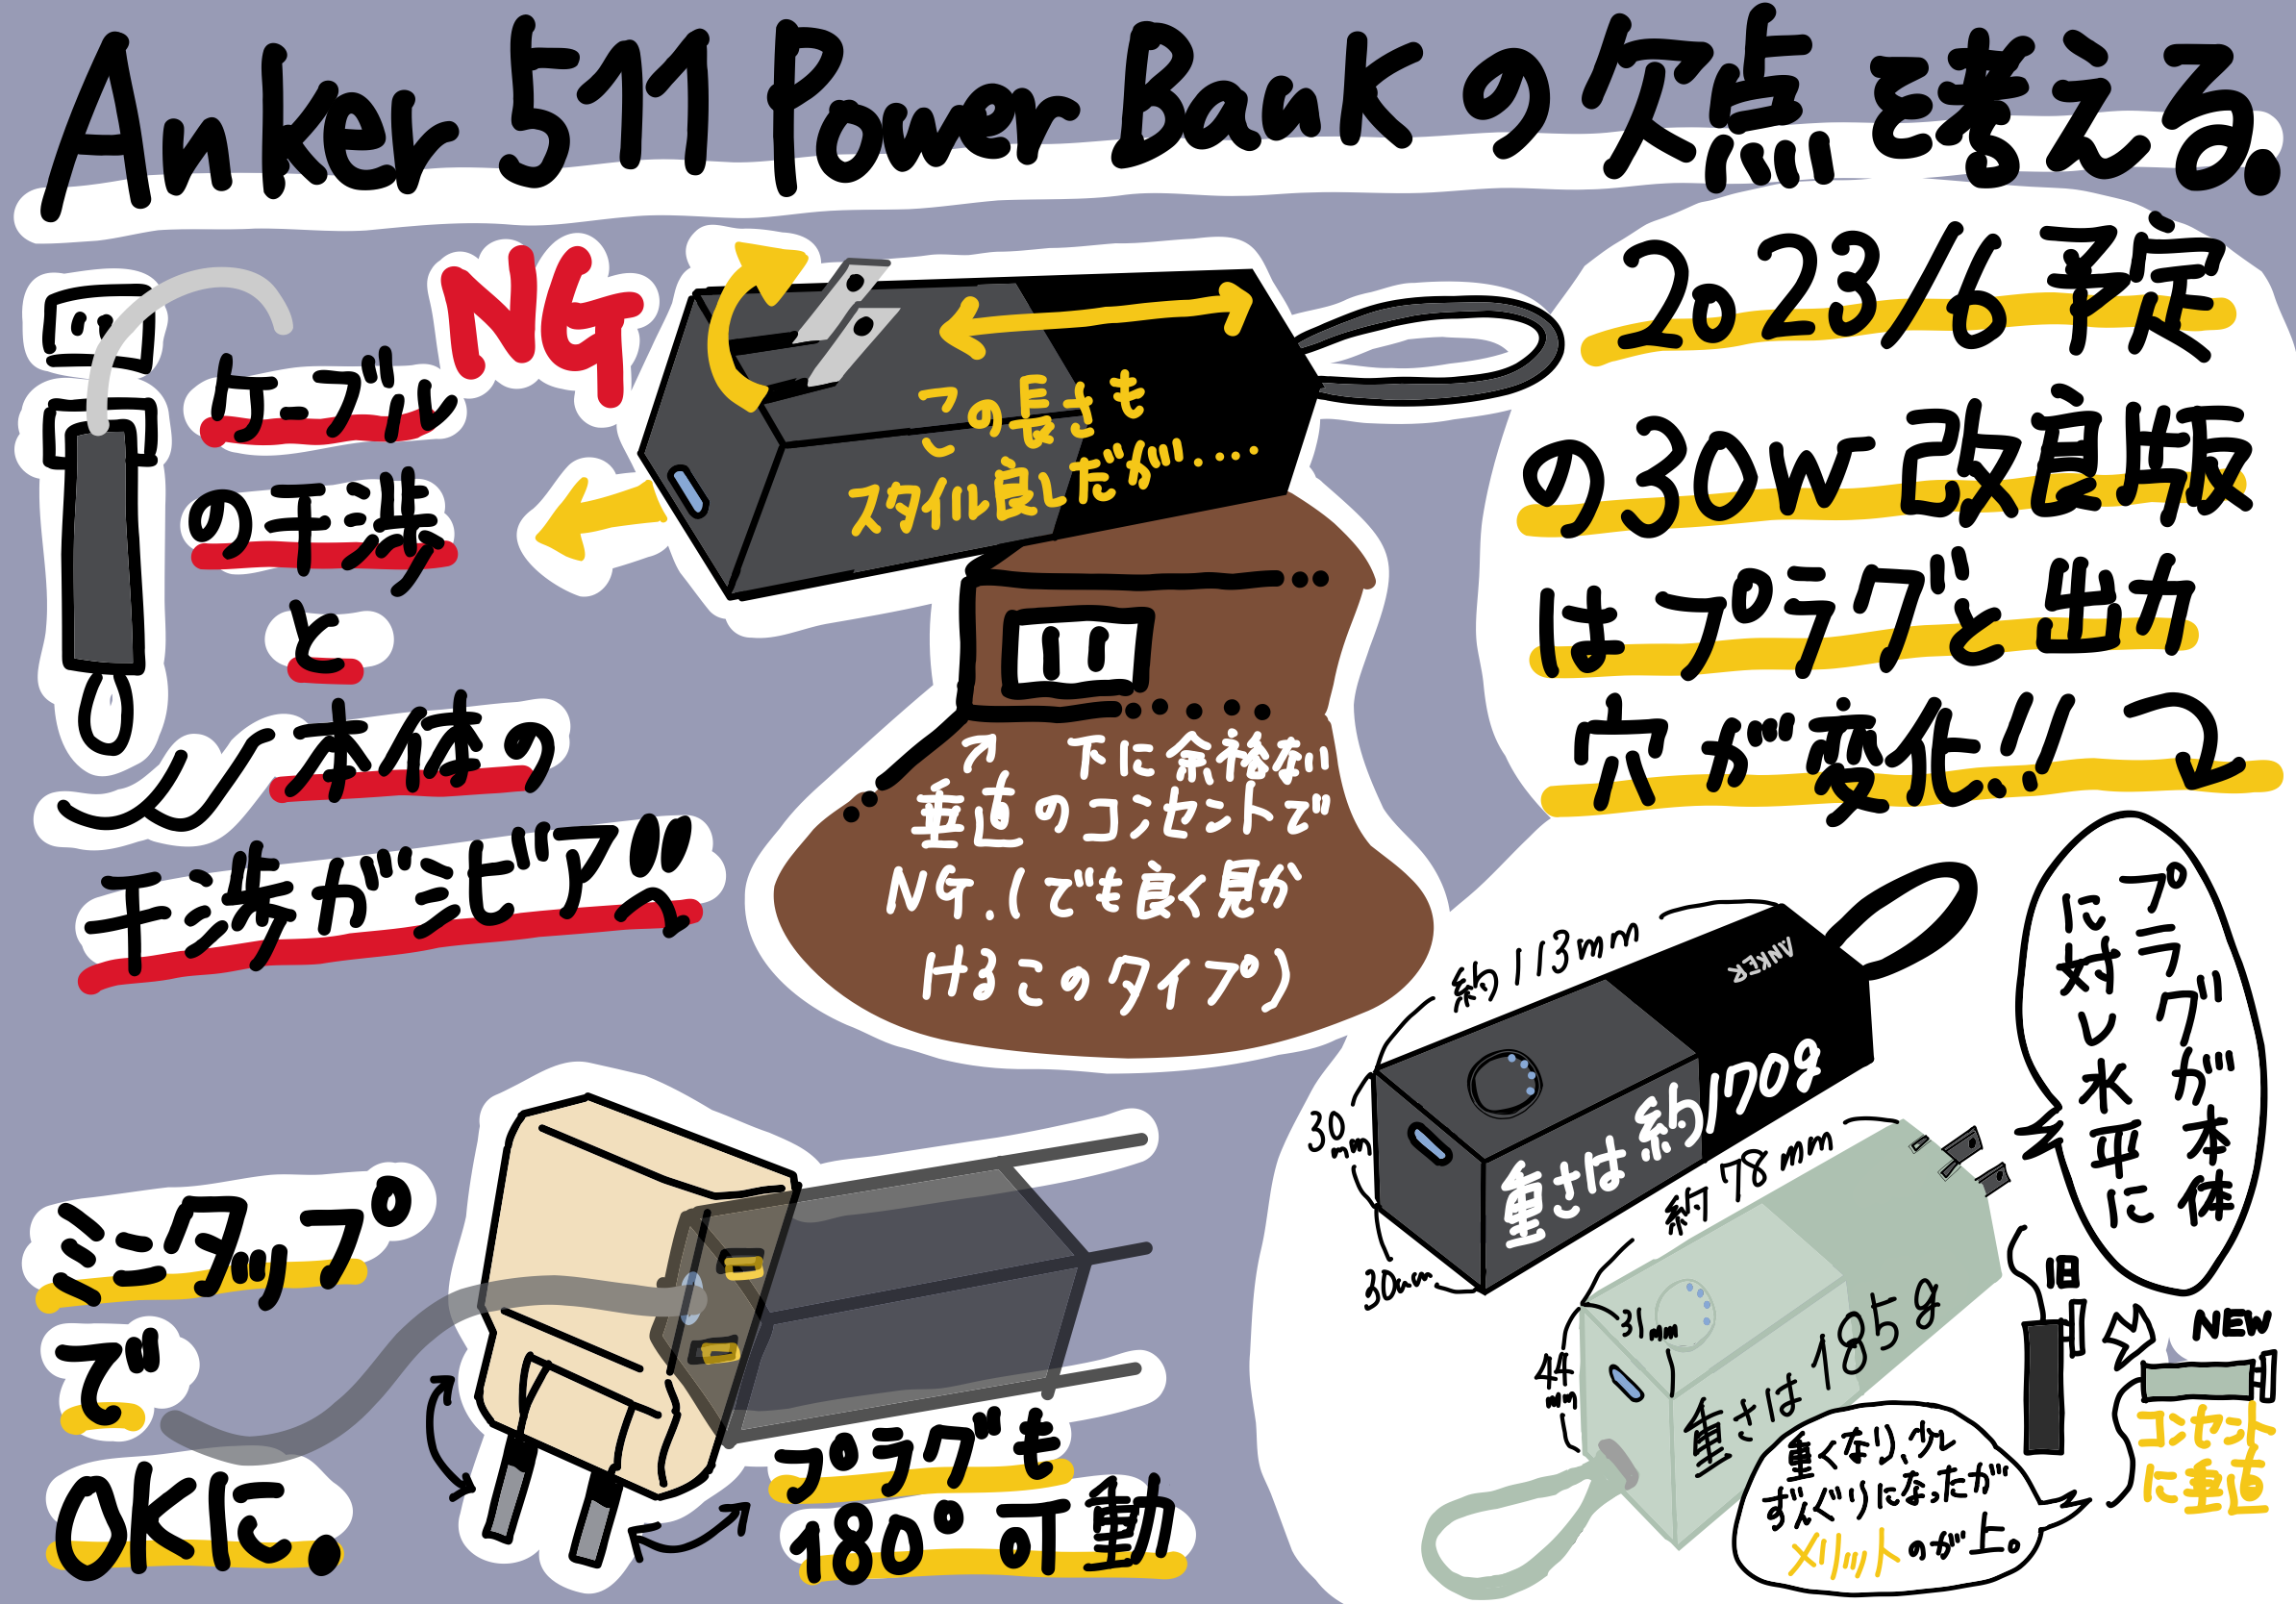 Anker 511 Power Bank スティック型のバッテリー搭載USB充電器 の欠点と 後継機（2023/6予定）での改善について